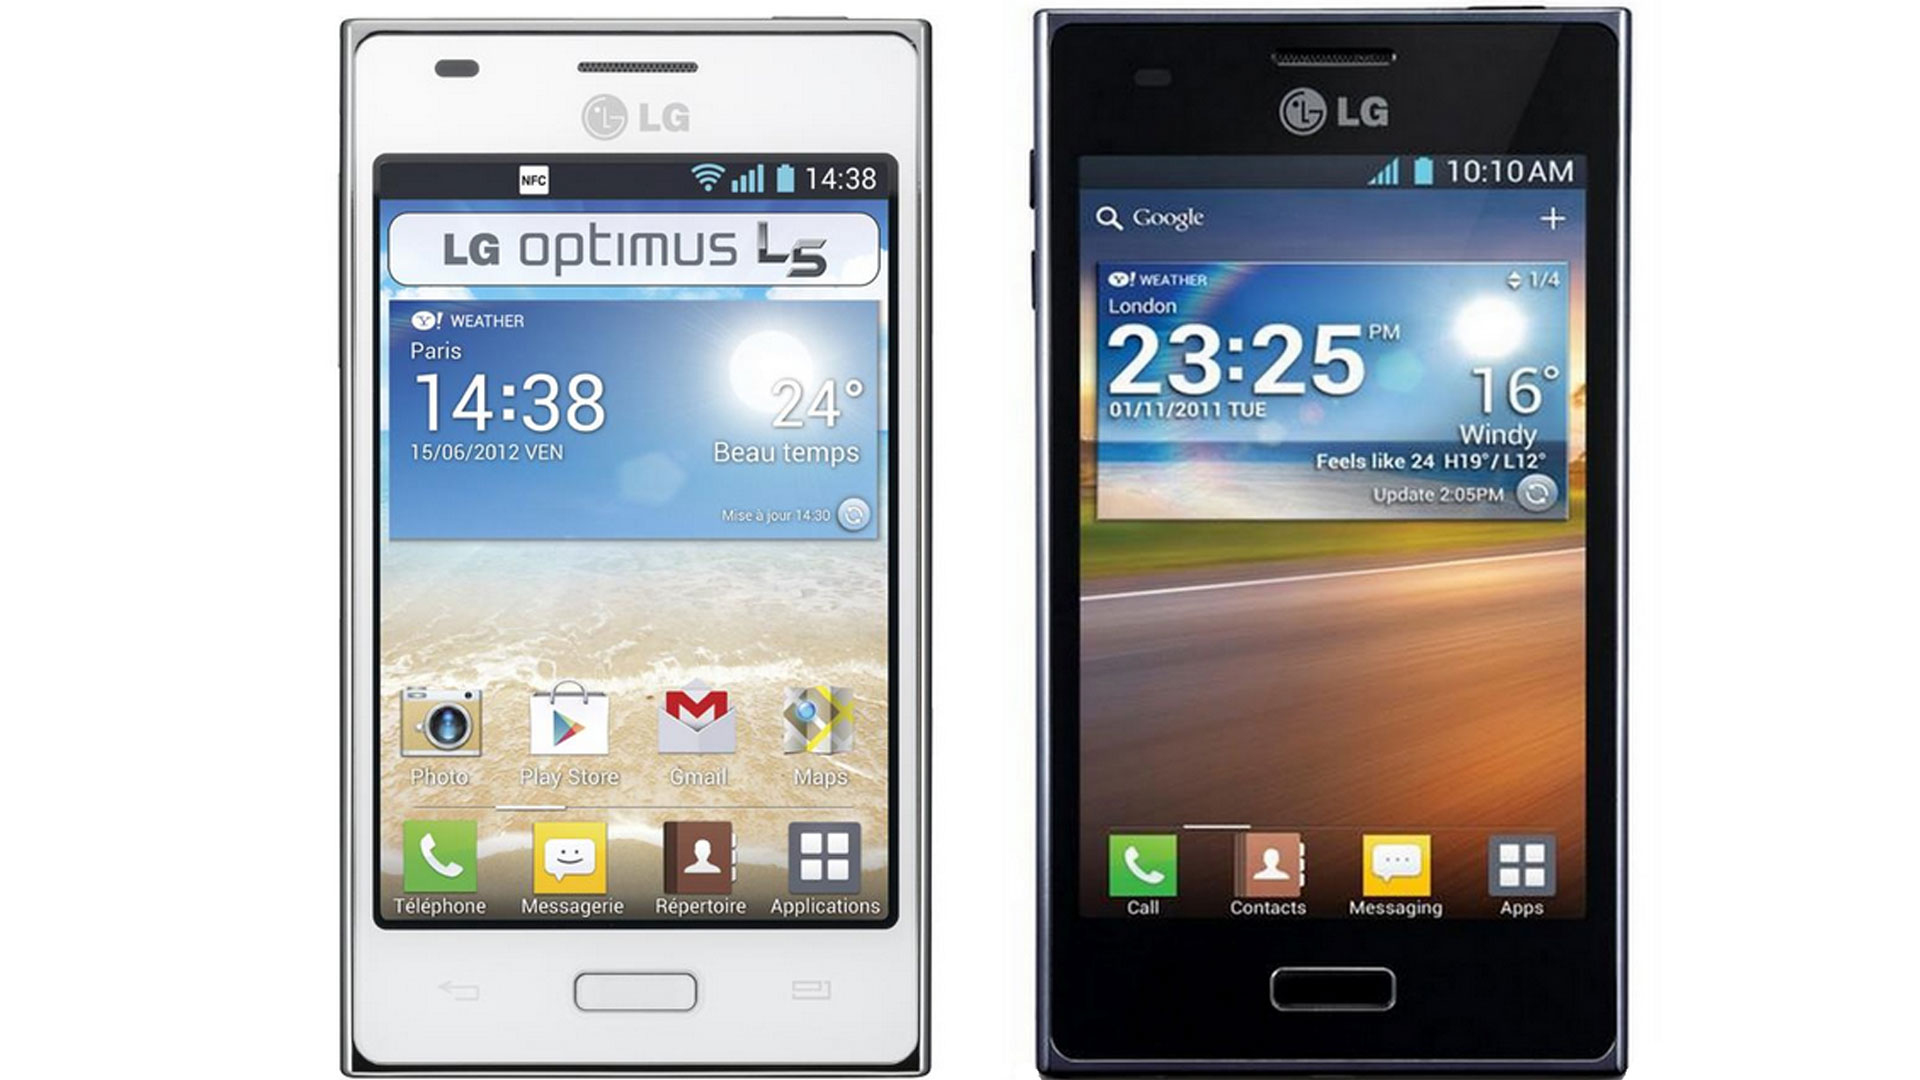 LG Optimus L5 - Hola Telcel